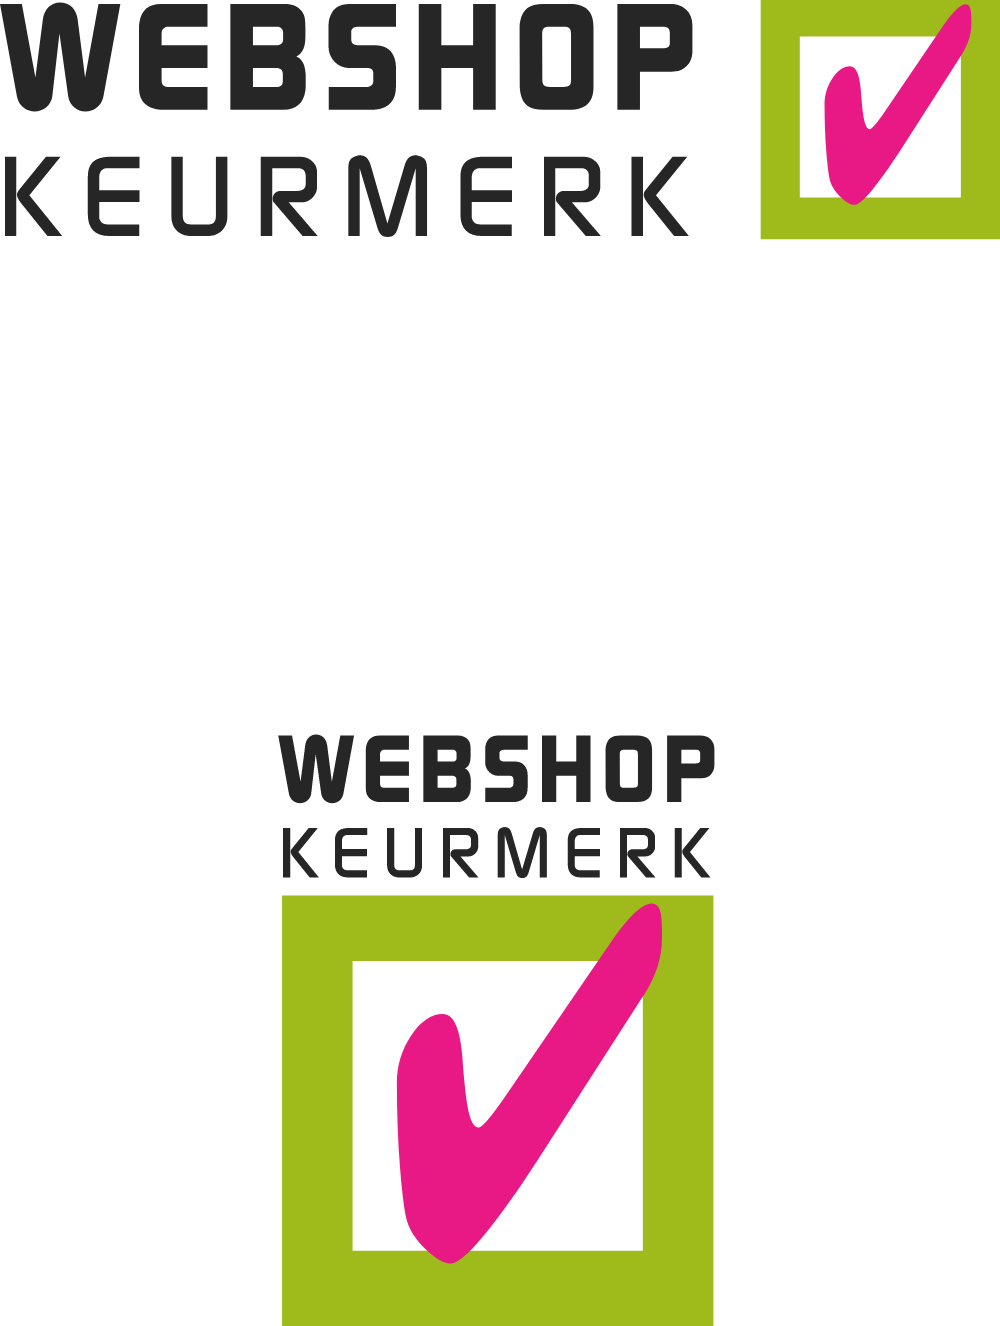 Webshop Keurmerk Logo Logos